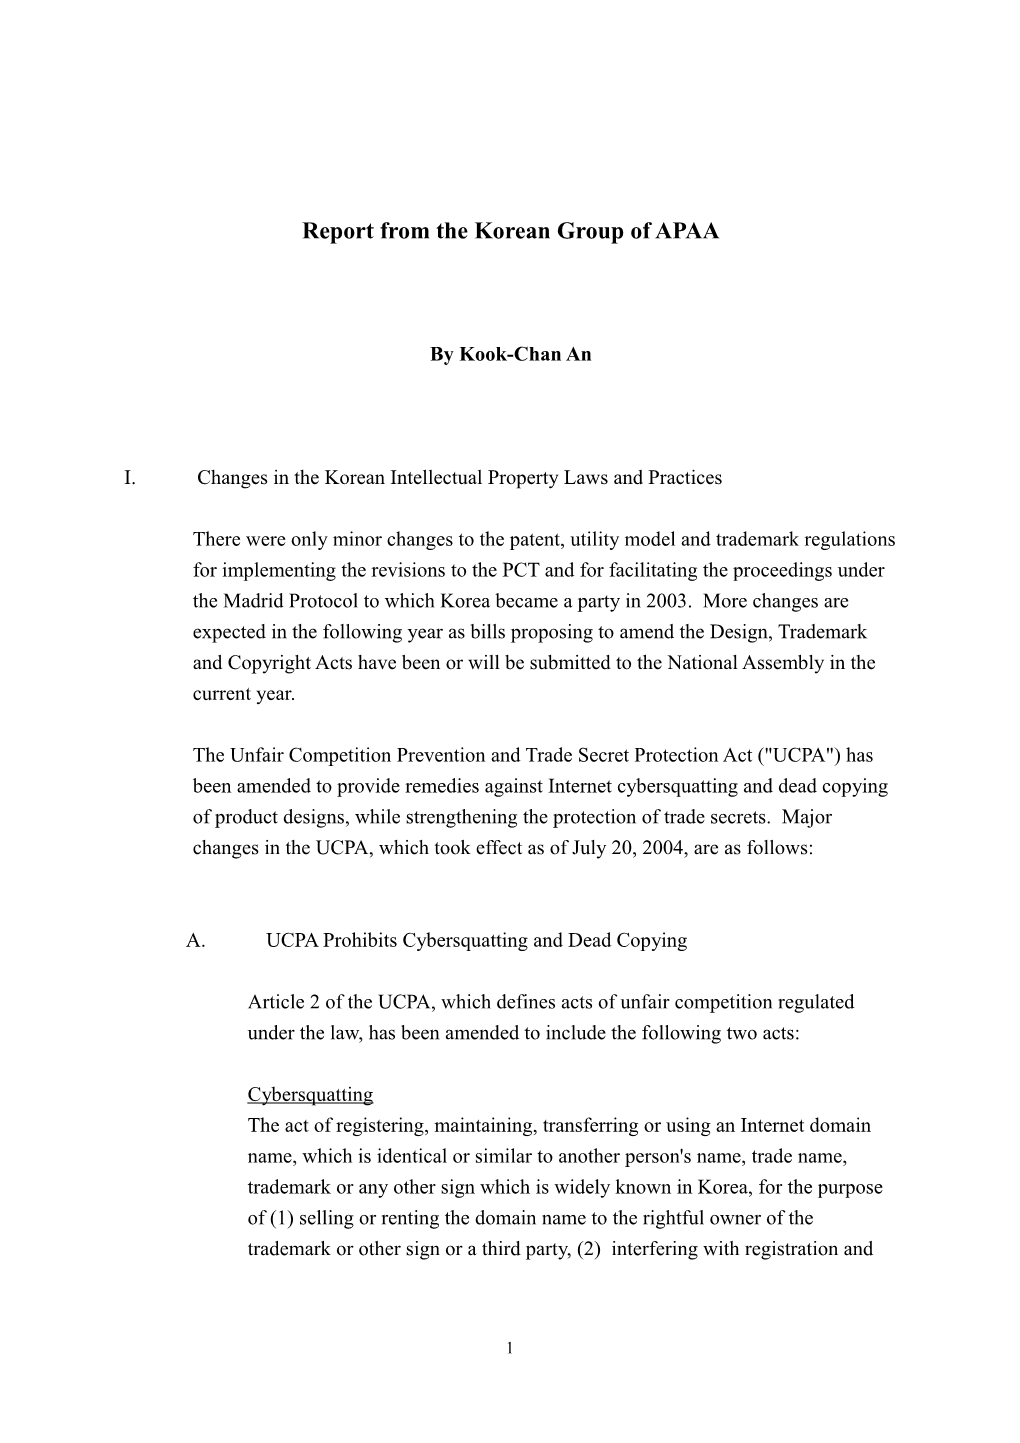 Report of Korean Group of APAA s1